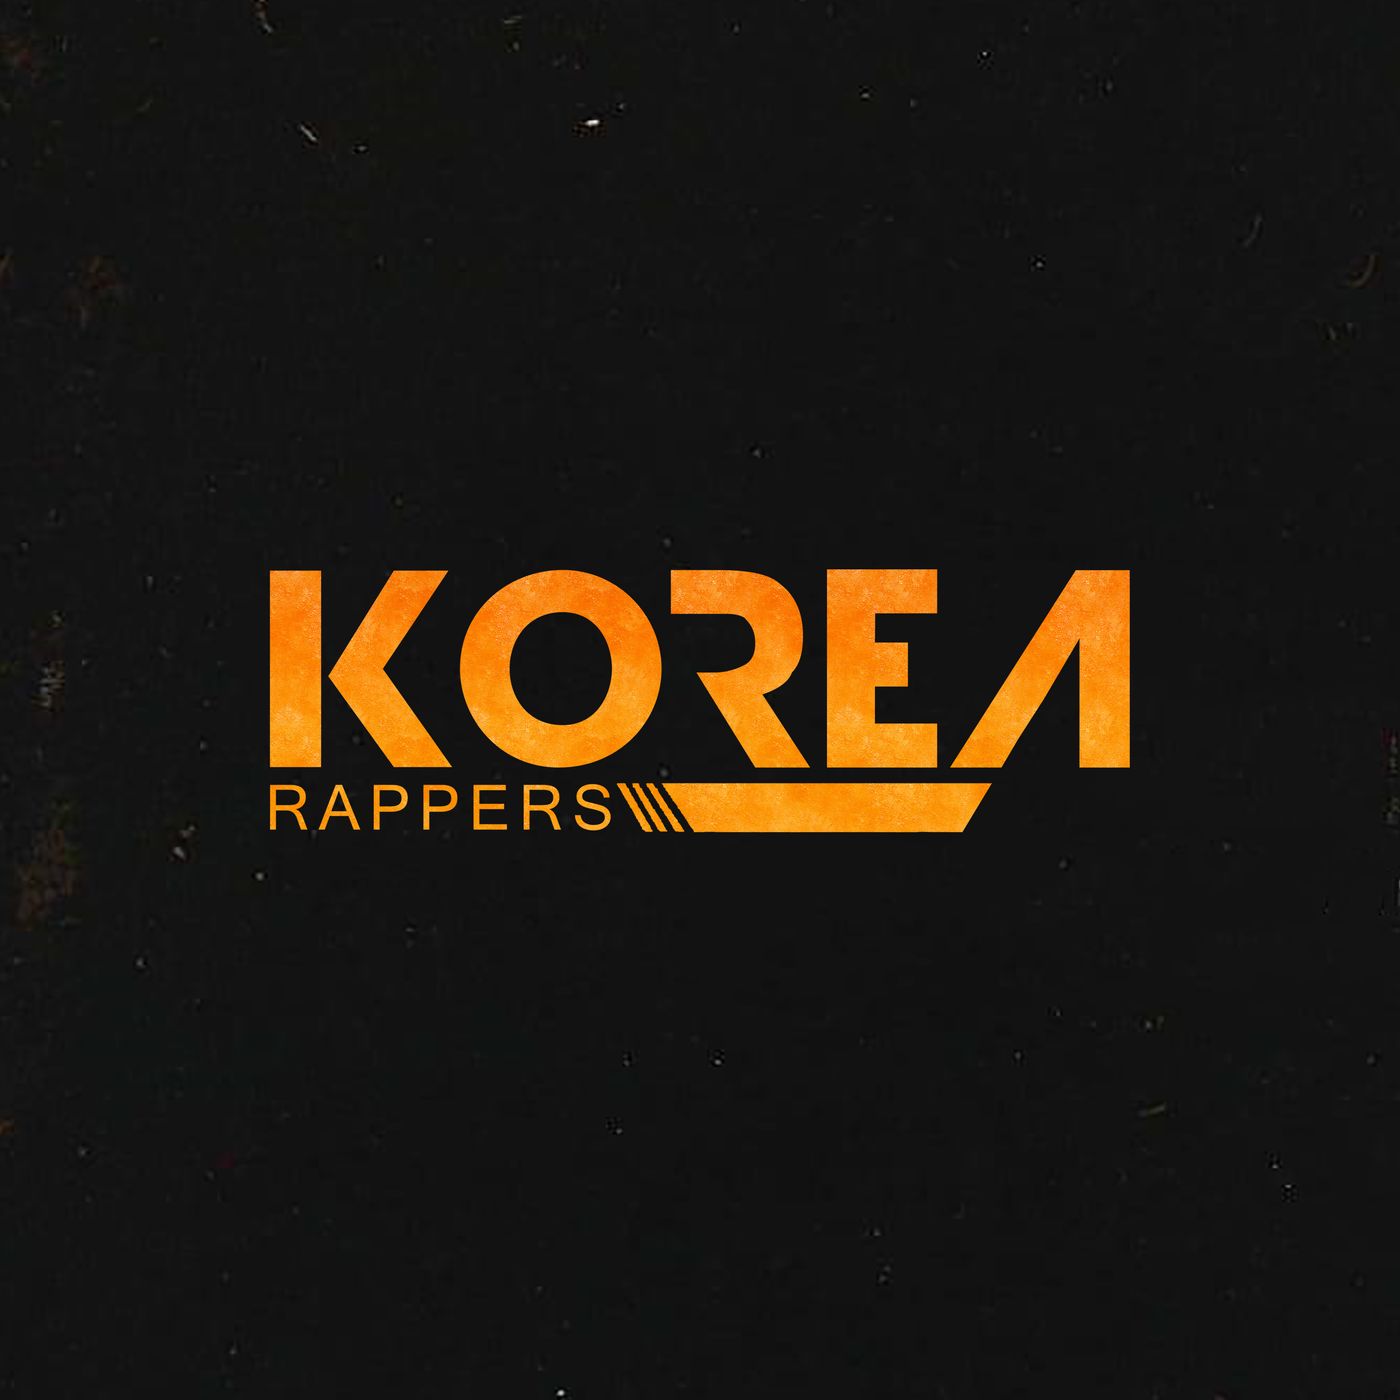 Korea Rappers